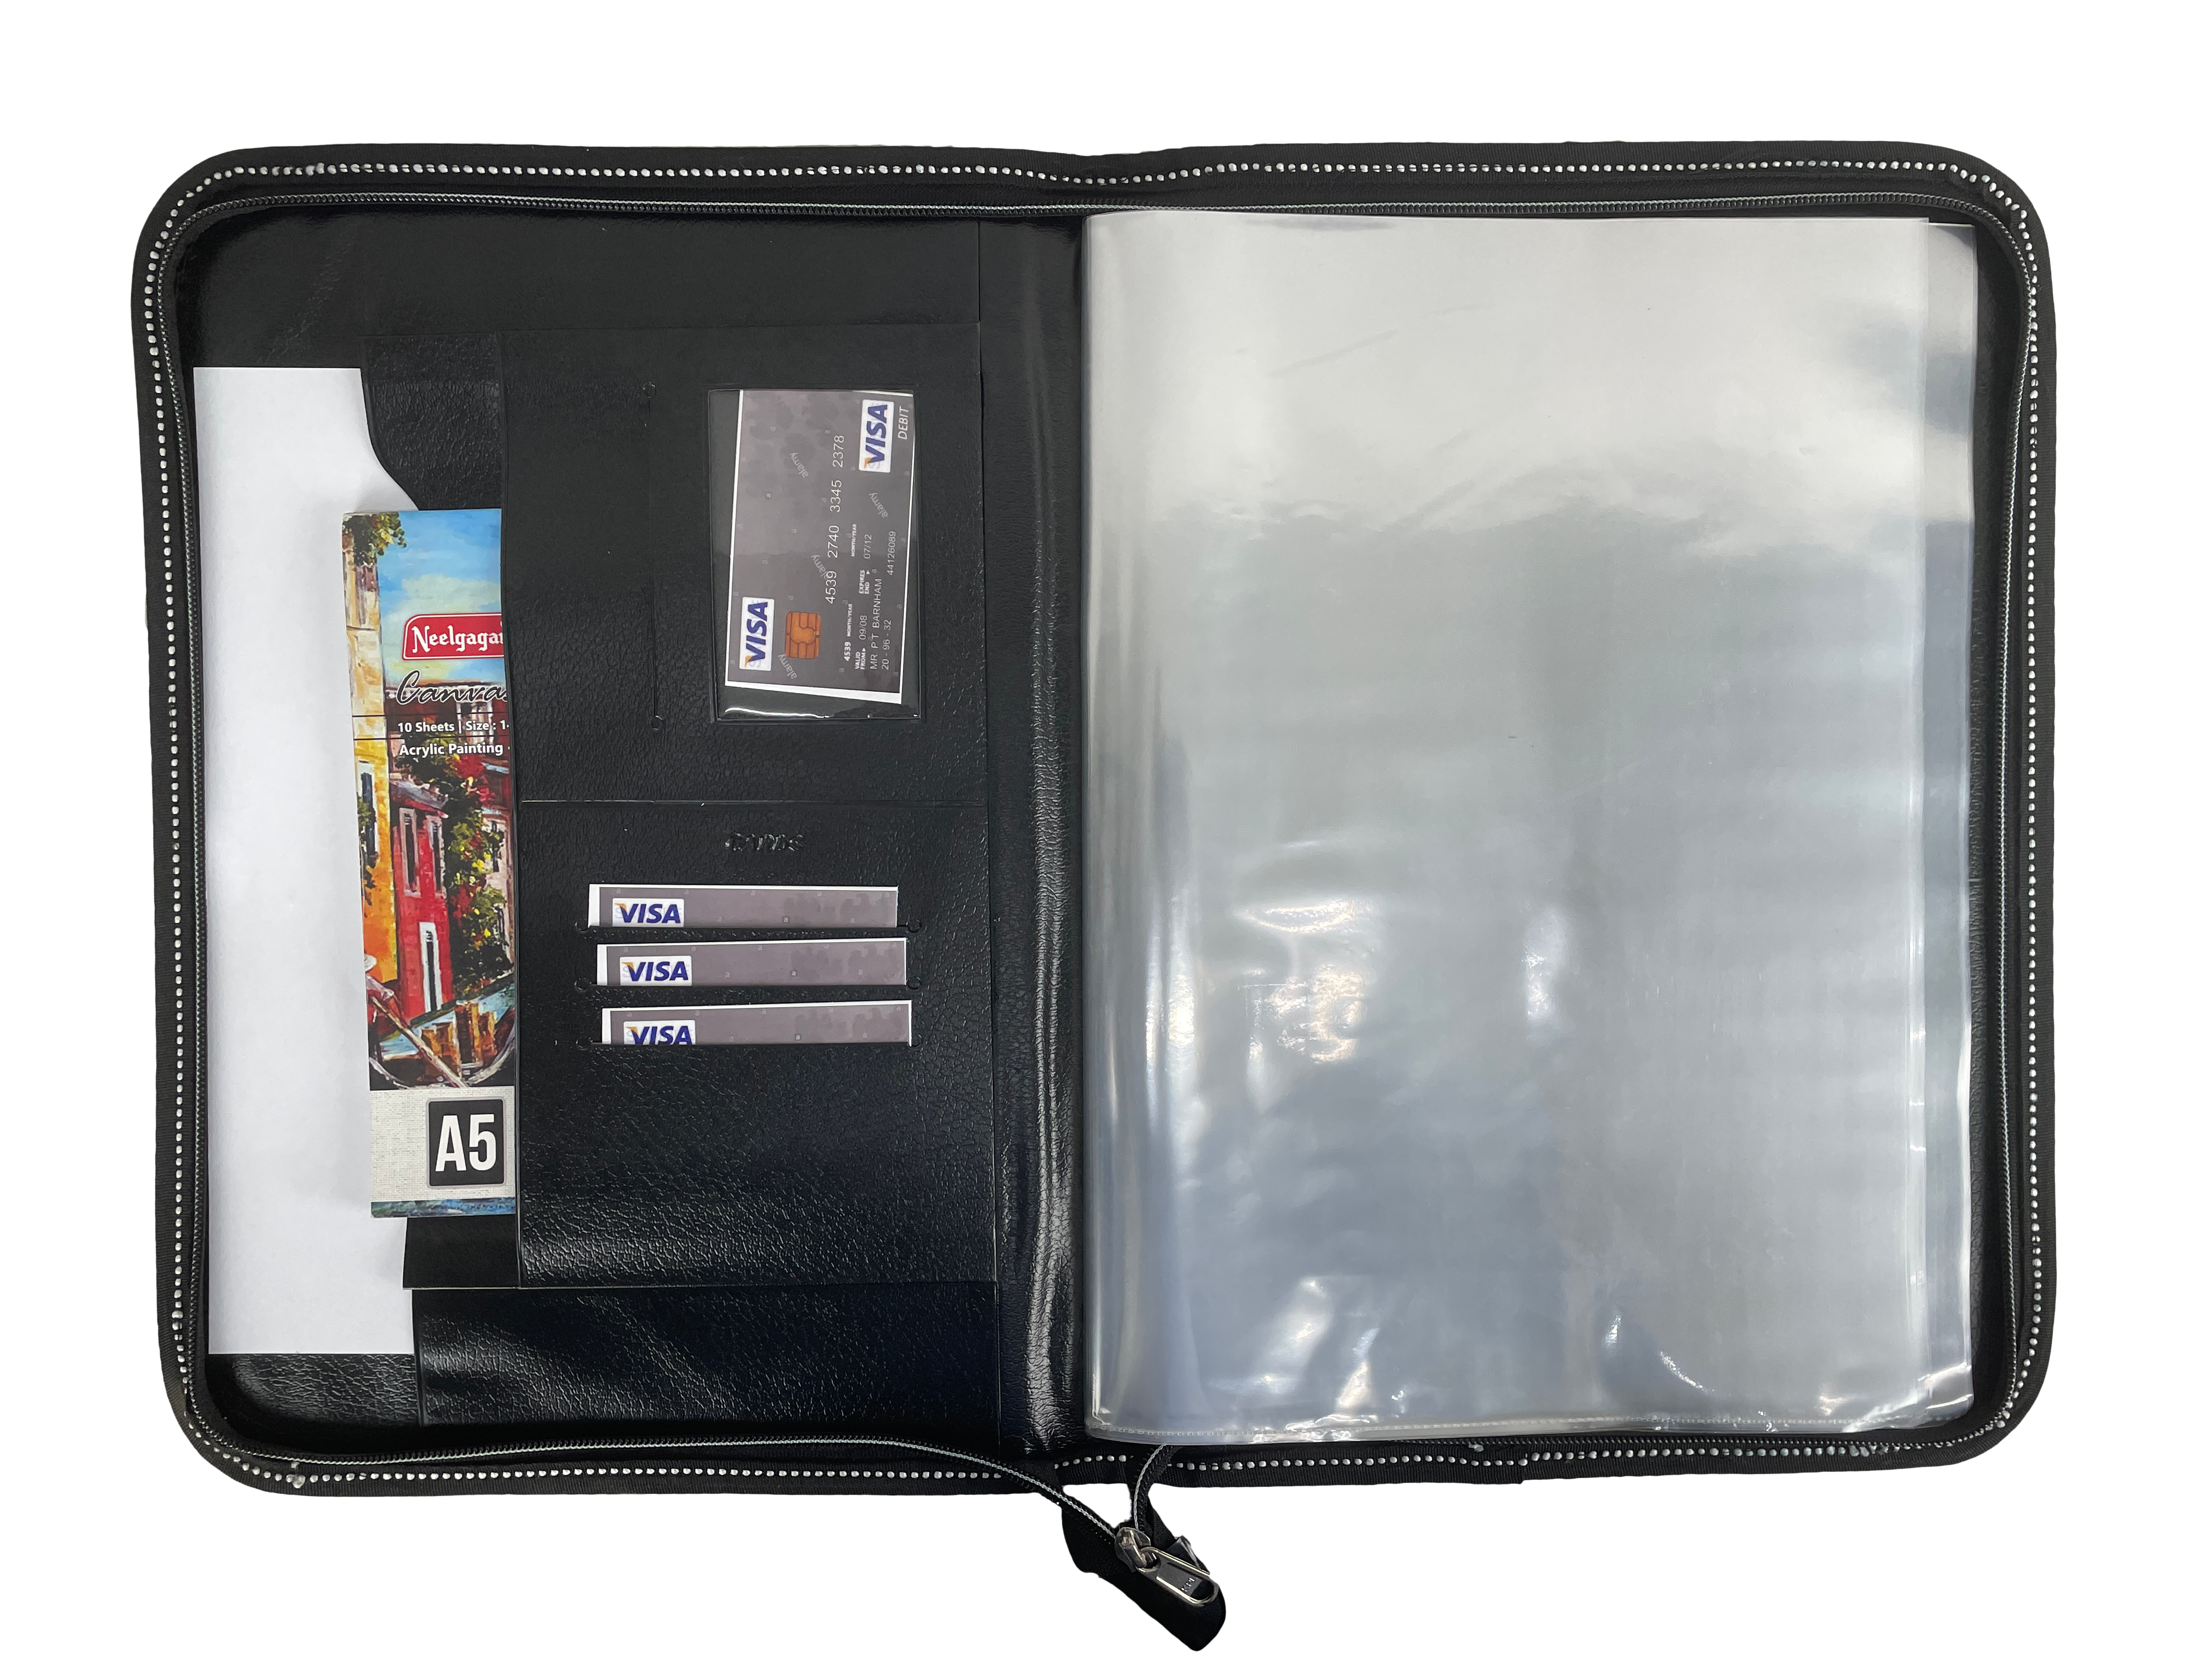 CB - 860 (Chain bag) Executive Portfolio Folder - with 20 Pockets (Leaves) - (Size : 38cm x 26.5cm)